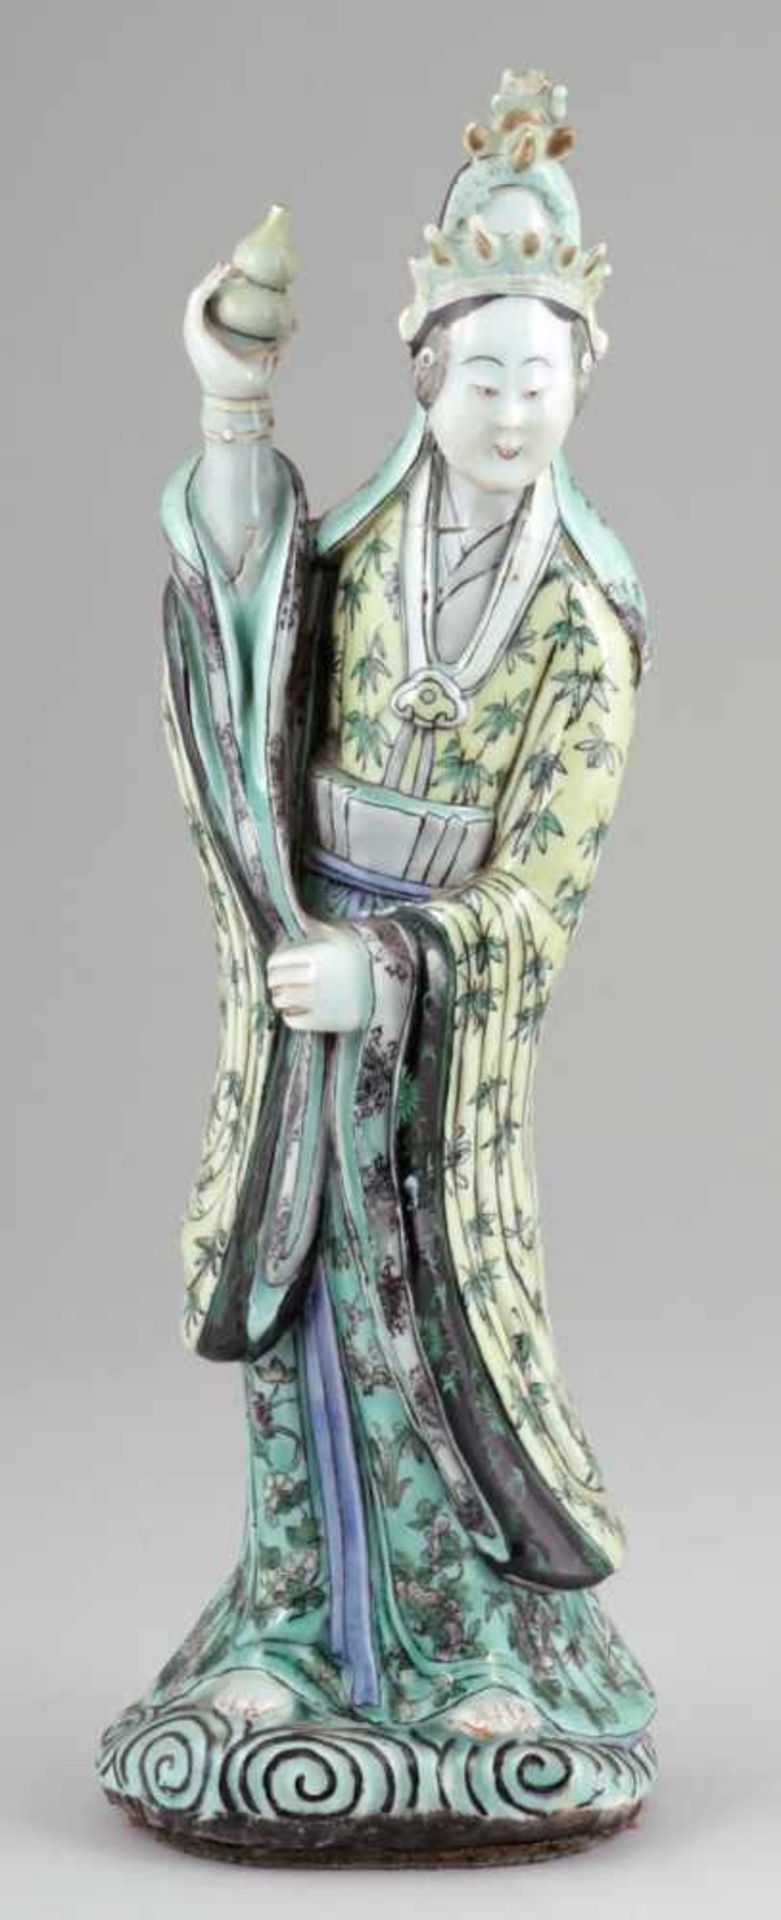 GuanjinChina, 19. Jahrhundert. - Famille Verte - Porzellan. Poychrom bemalt. H. 46 cm. - Zustand: